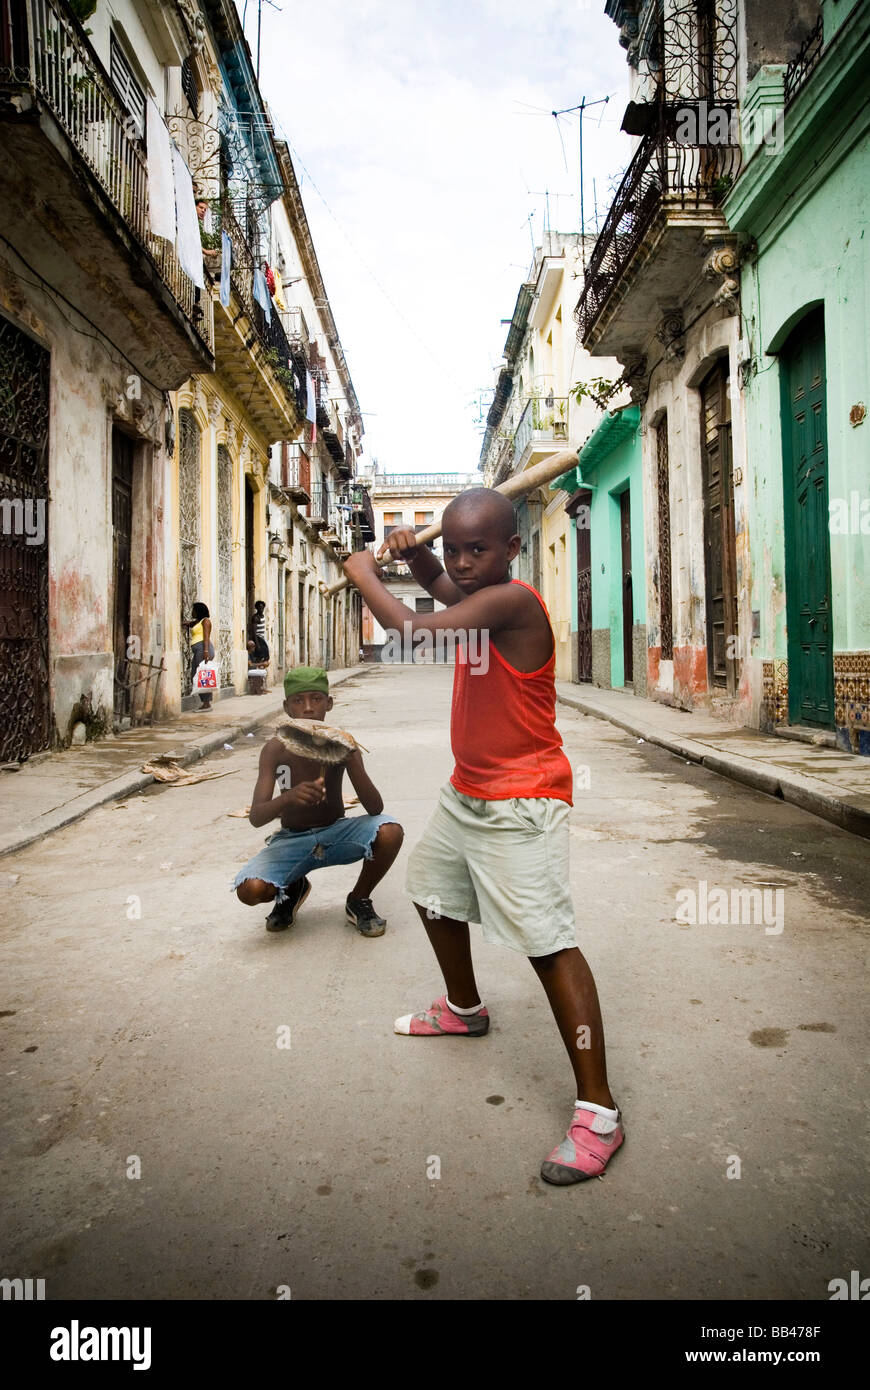 Boy playing baseball in street with broomstick bat, Havana, Cuba. Stock Photo